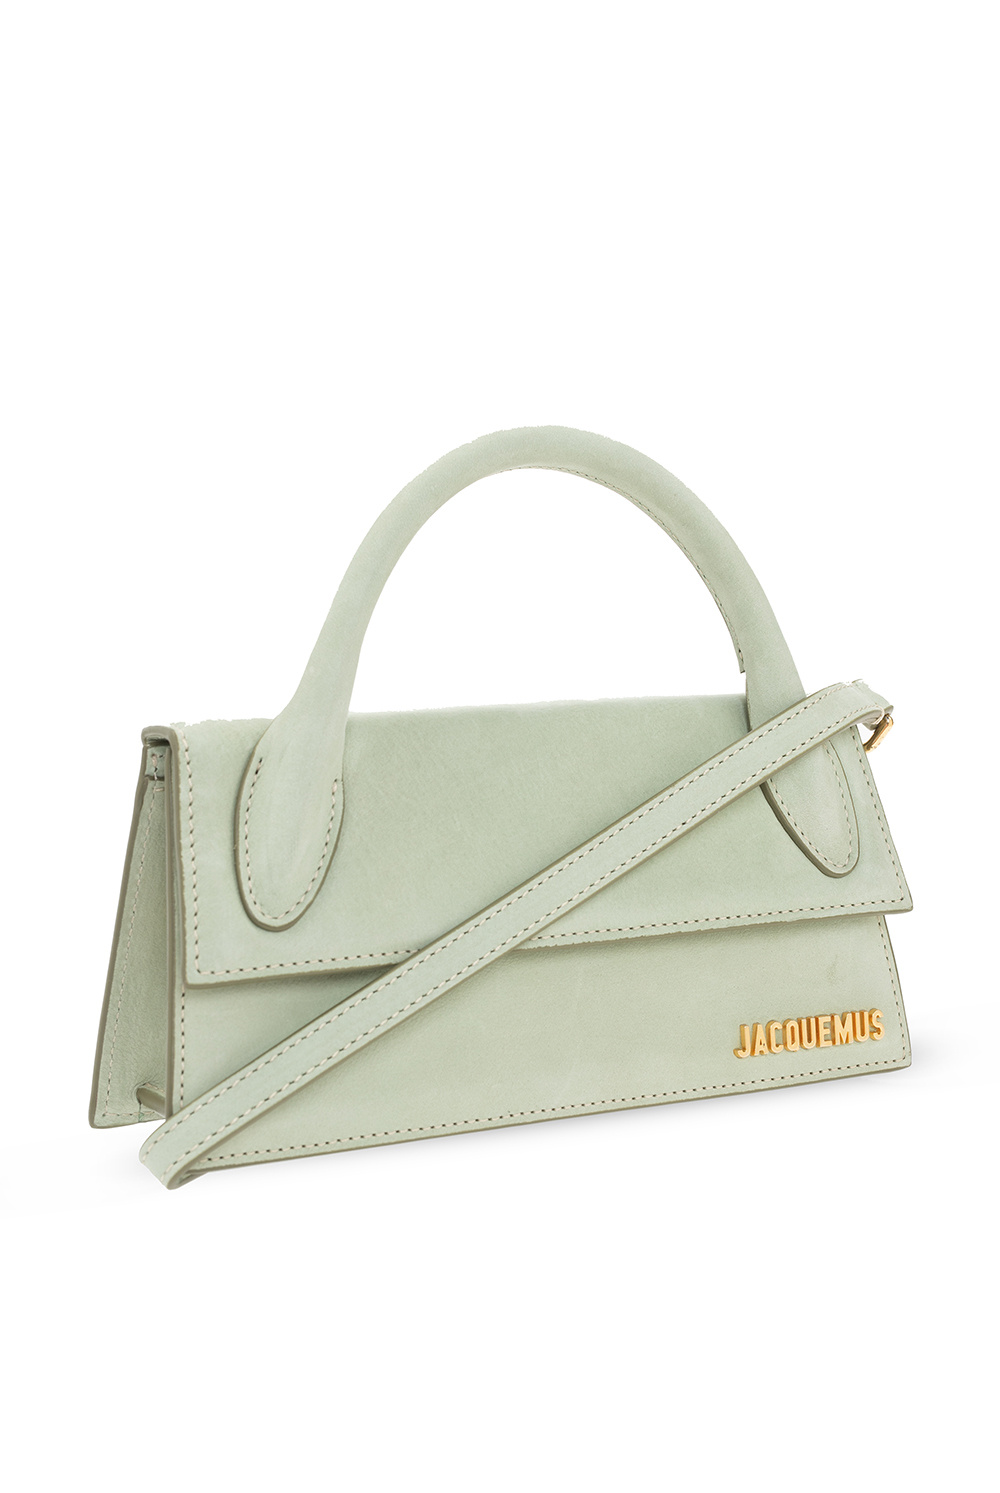 Green 'Le Chiquito Long' shoulder bag Jacquemus - Vitkac HK